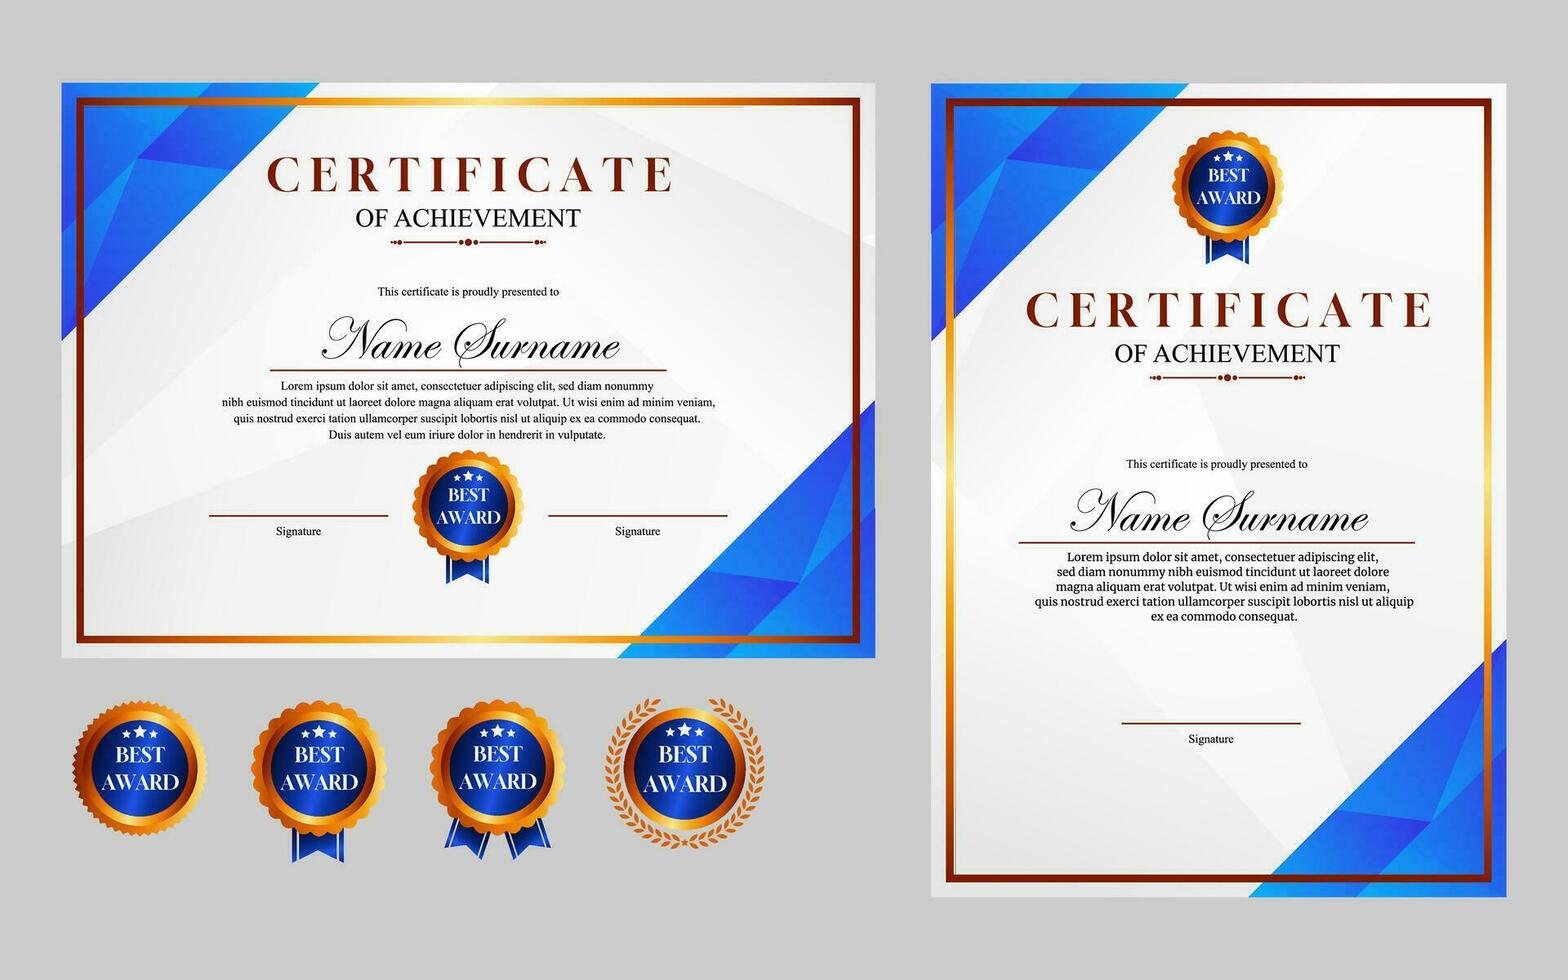 certificate design simple modern a4 luxury certificate blue gold color vector